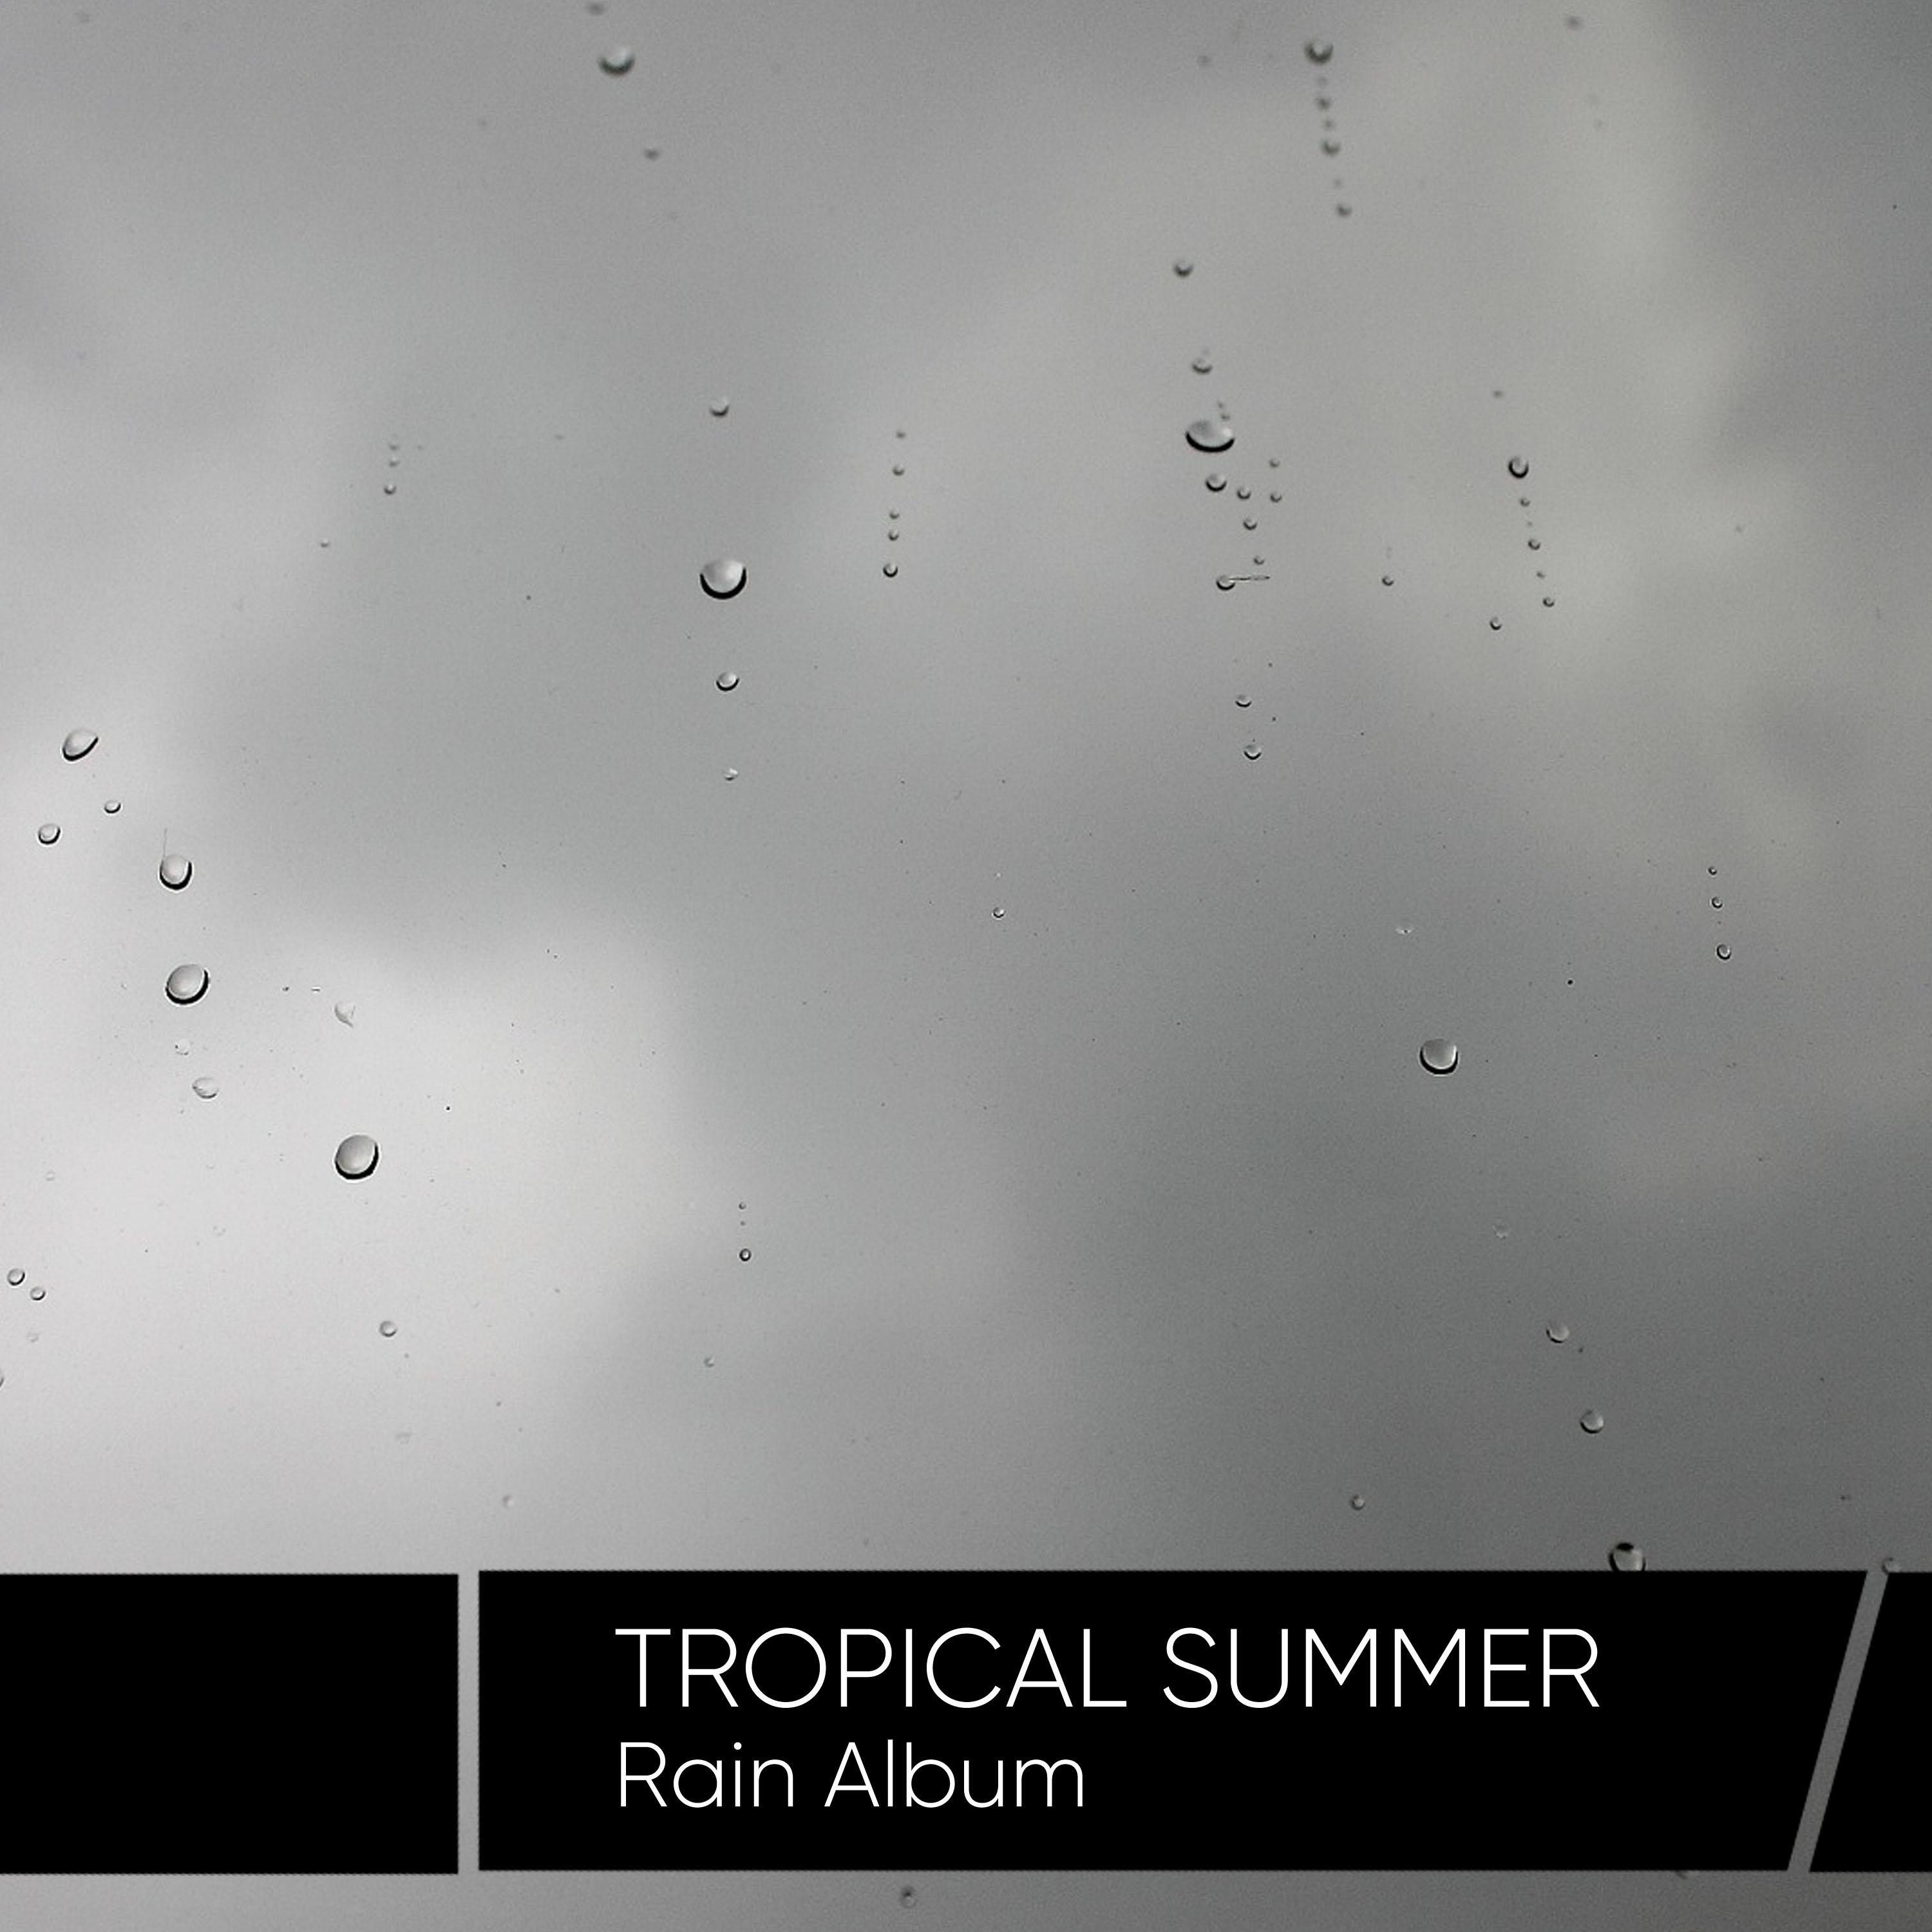 Tropical Summer Rain Album